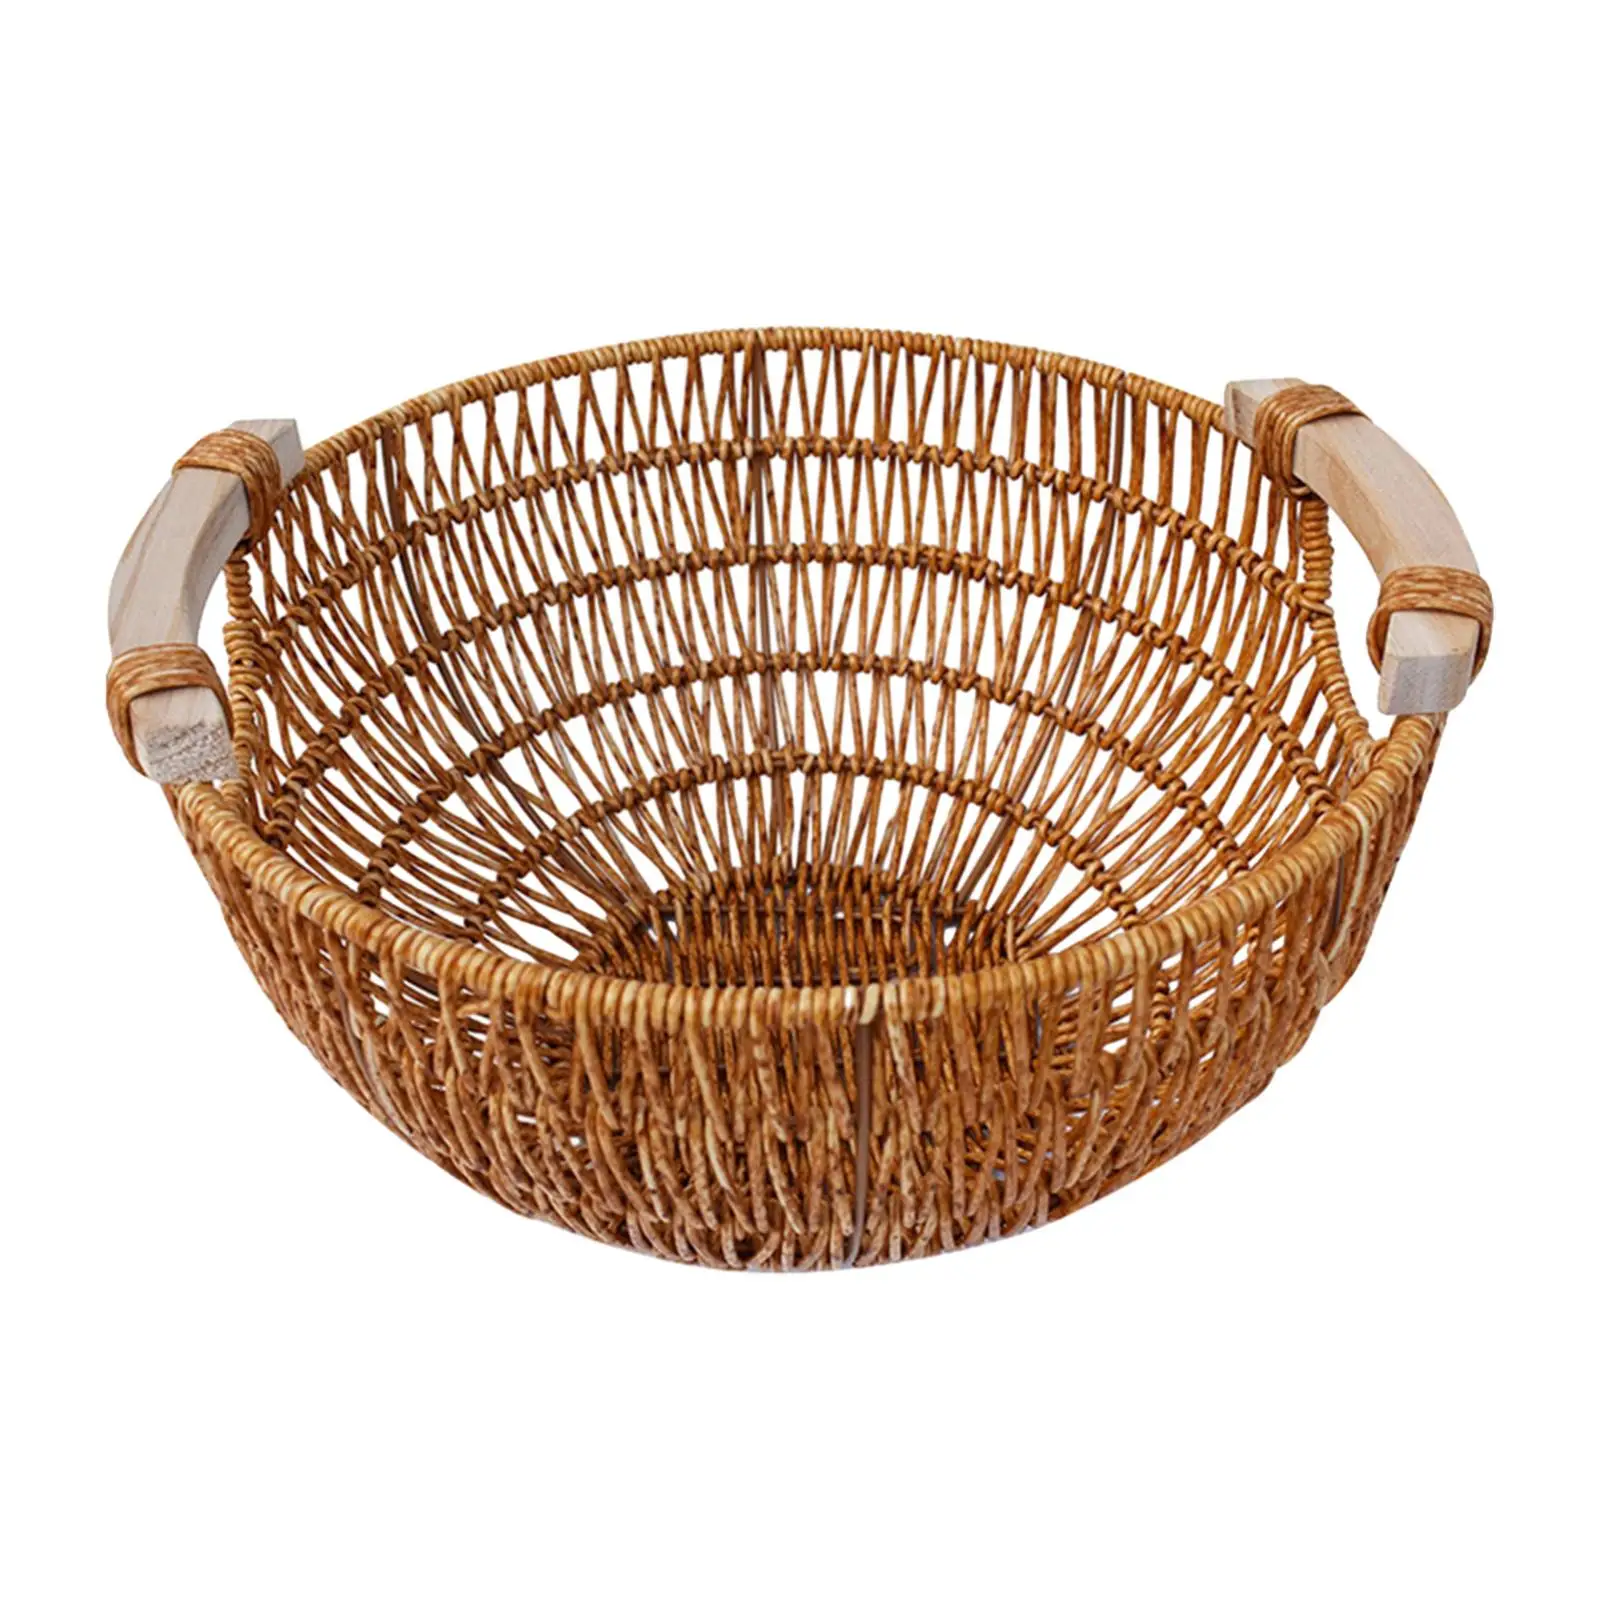 Fruit Basket Sturdy Photography Props Handmade with Handle Hamper Basket Outdoor Basket Round Storage Basket for Home Garden